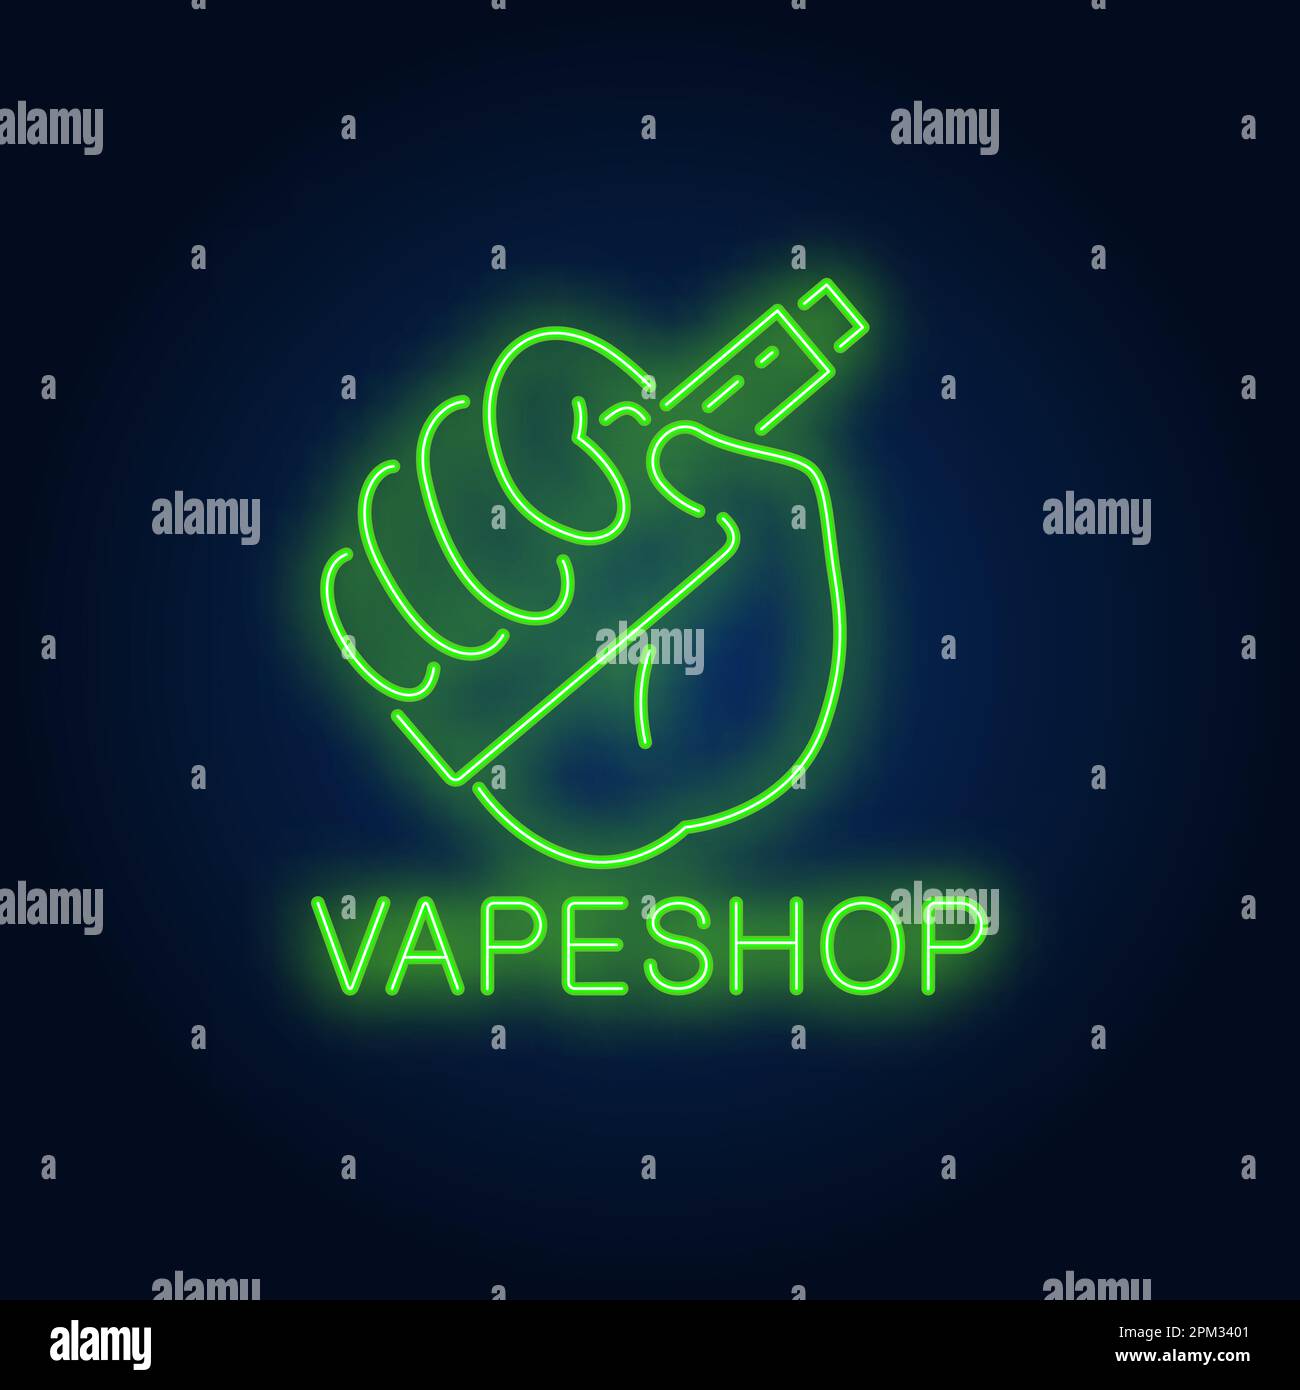 Vape shop neon sign Stock Vector